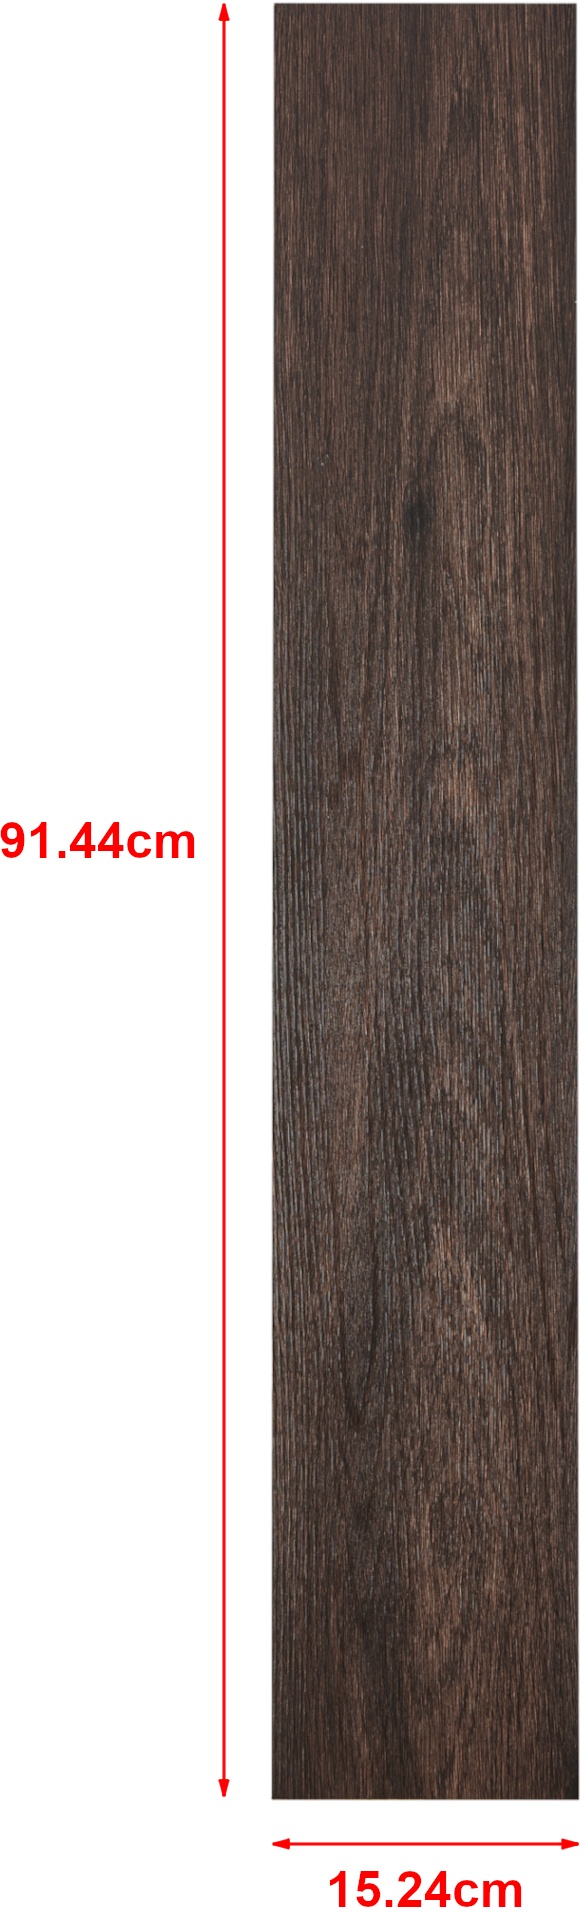 NEU.HOLZ Vinyl Laminat Vanola selbstklebend 5,85m2 Dark Wood Wenge